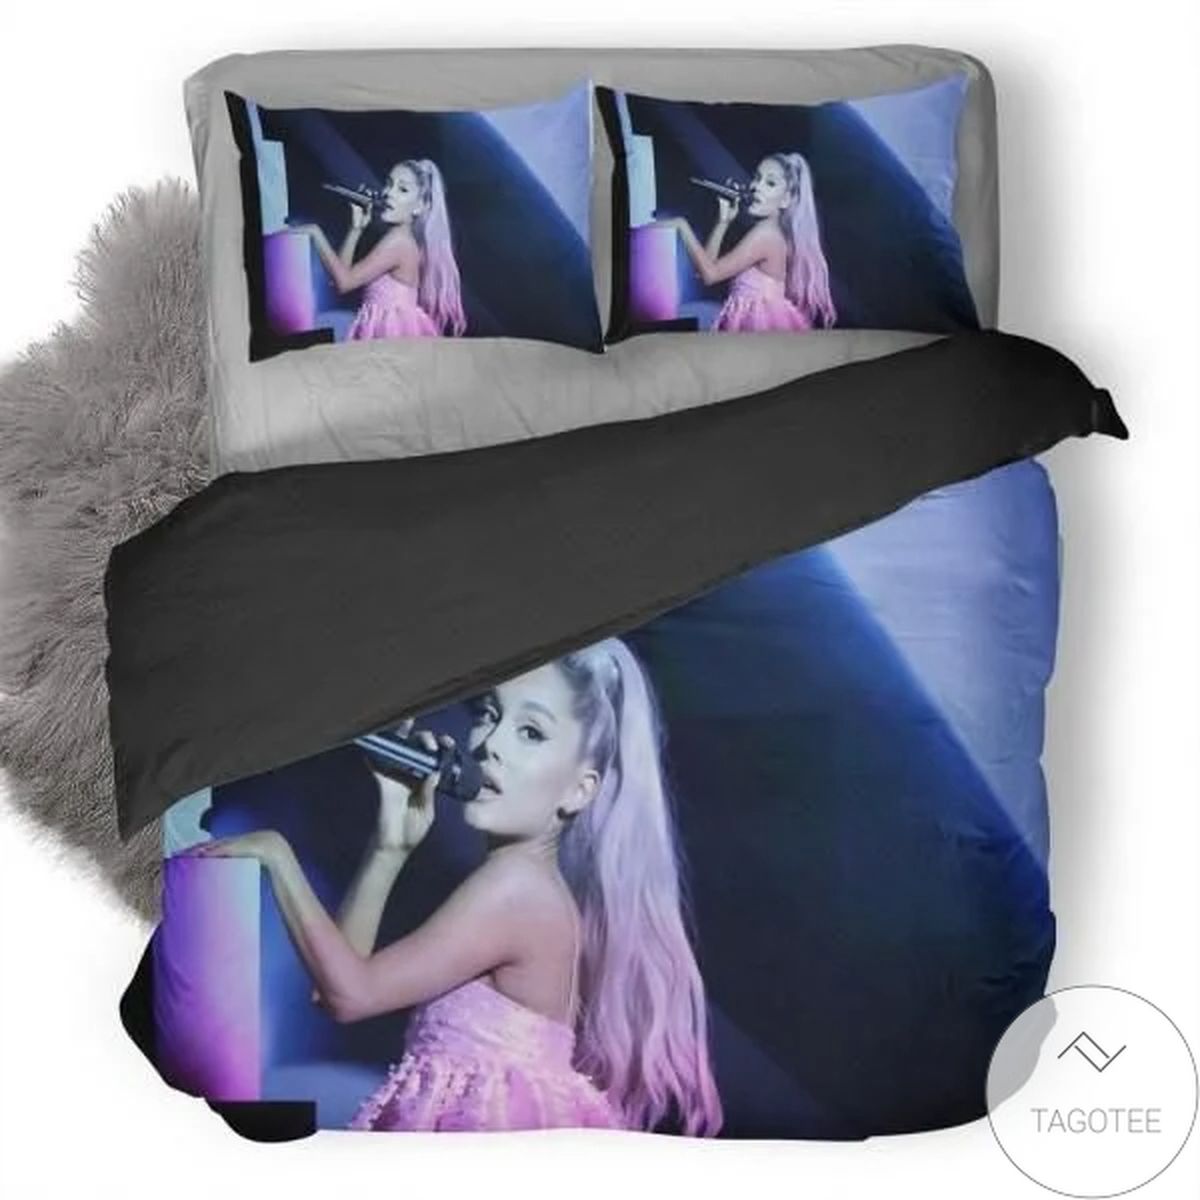 Ariana Grande Live Performance Bedding Set